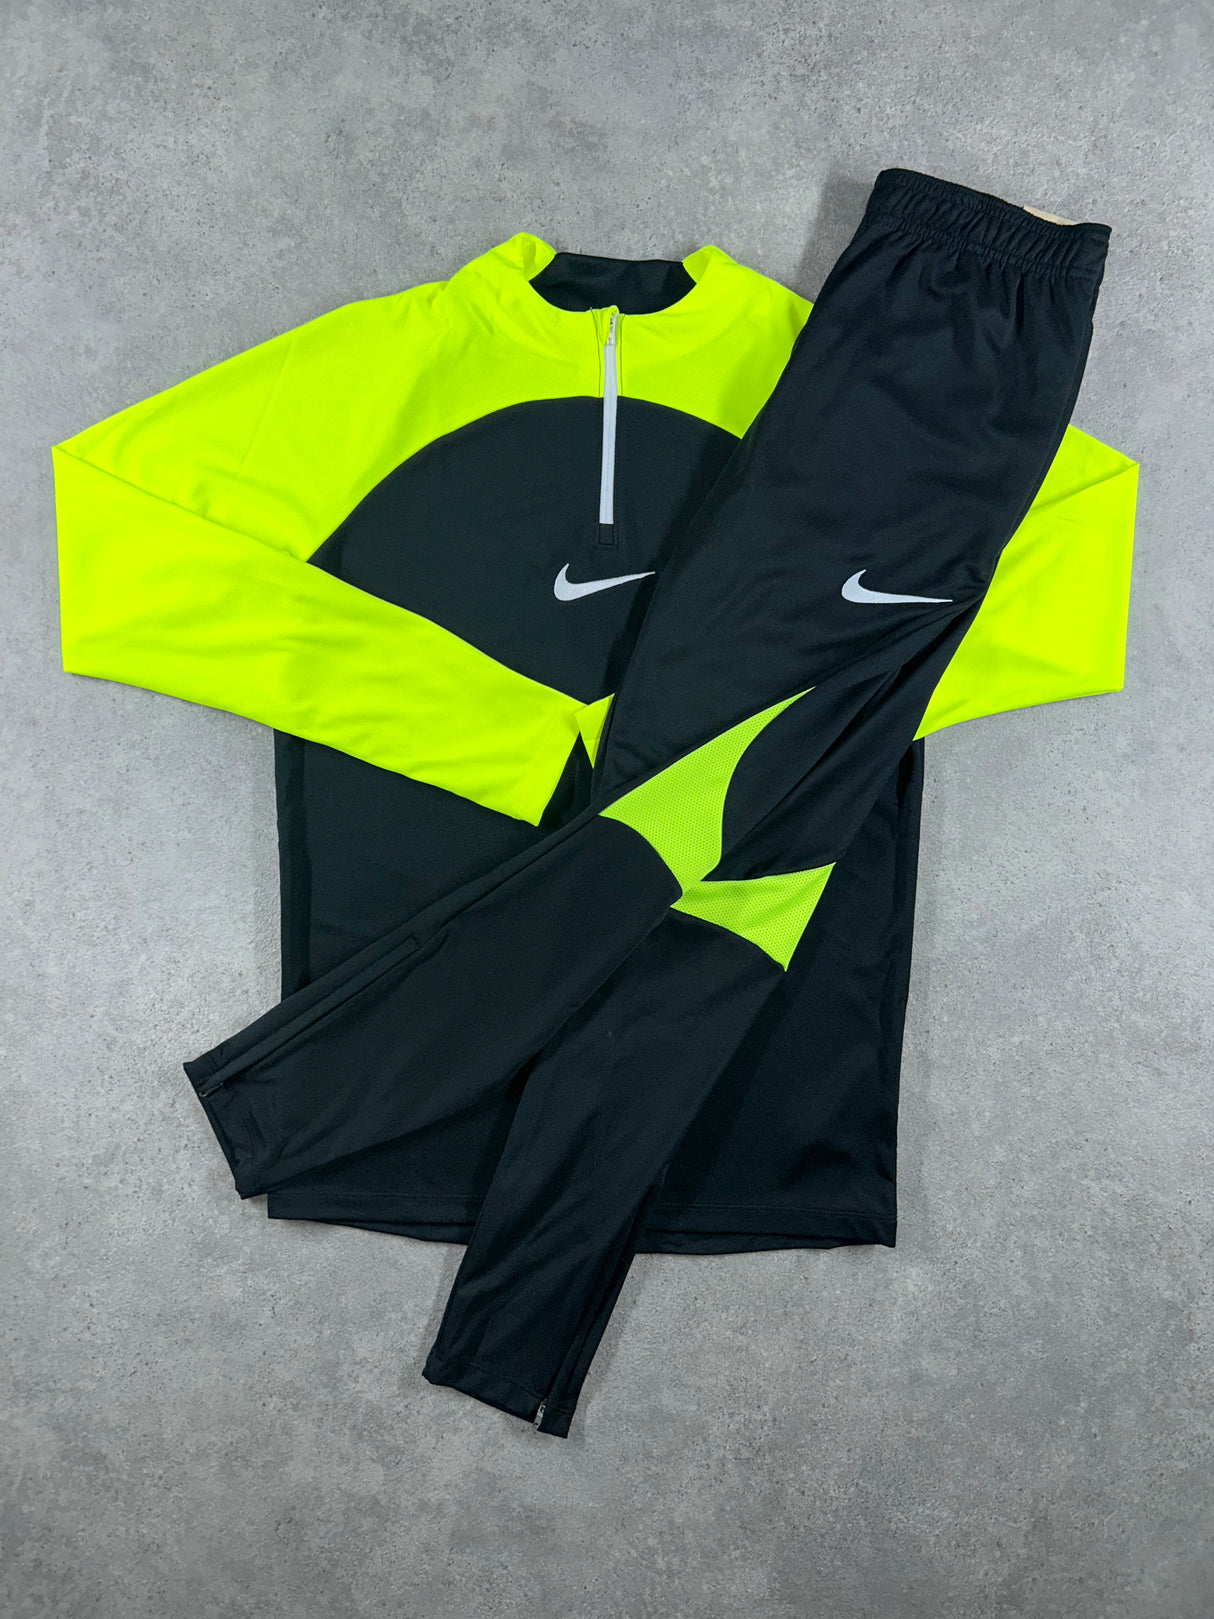 Nike - Academy Pro Tracksuit - Black/Volt